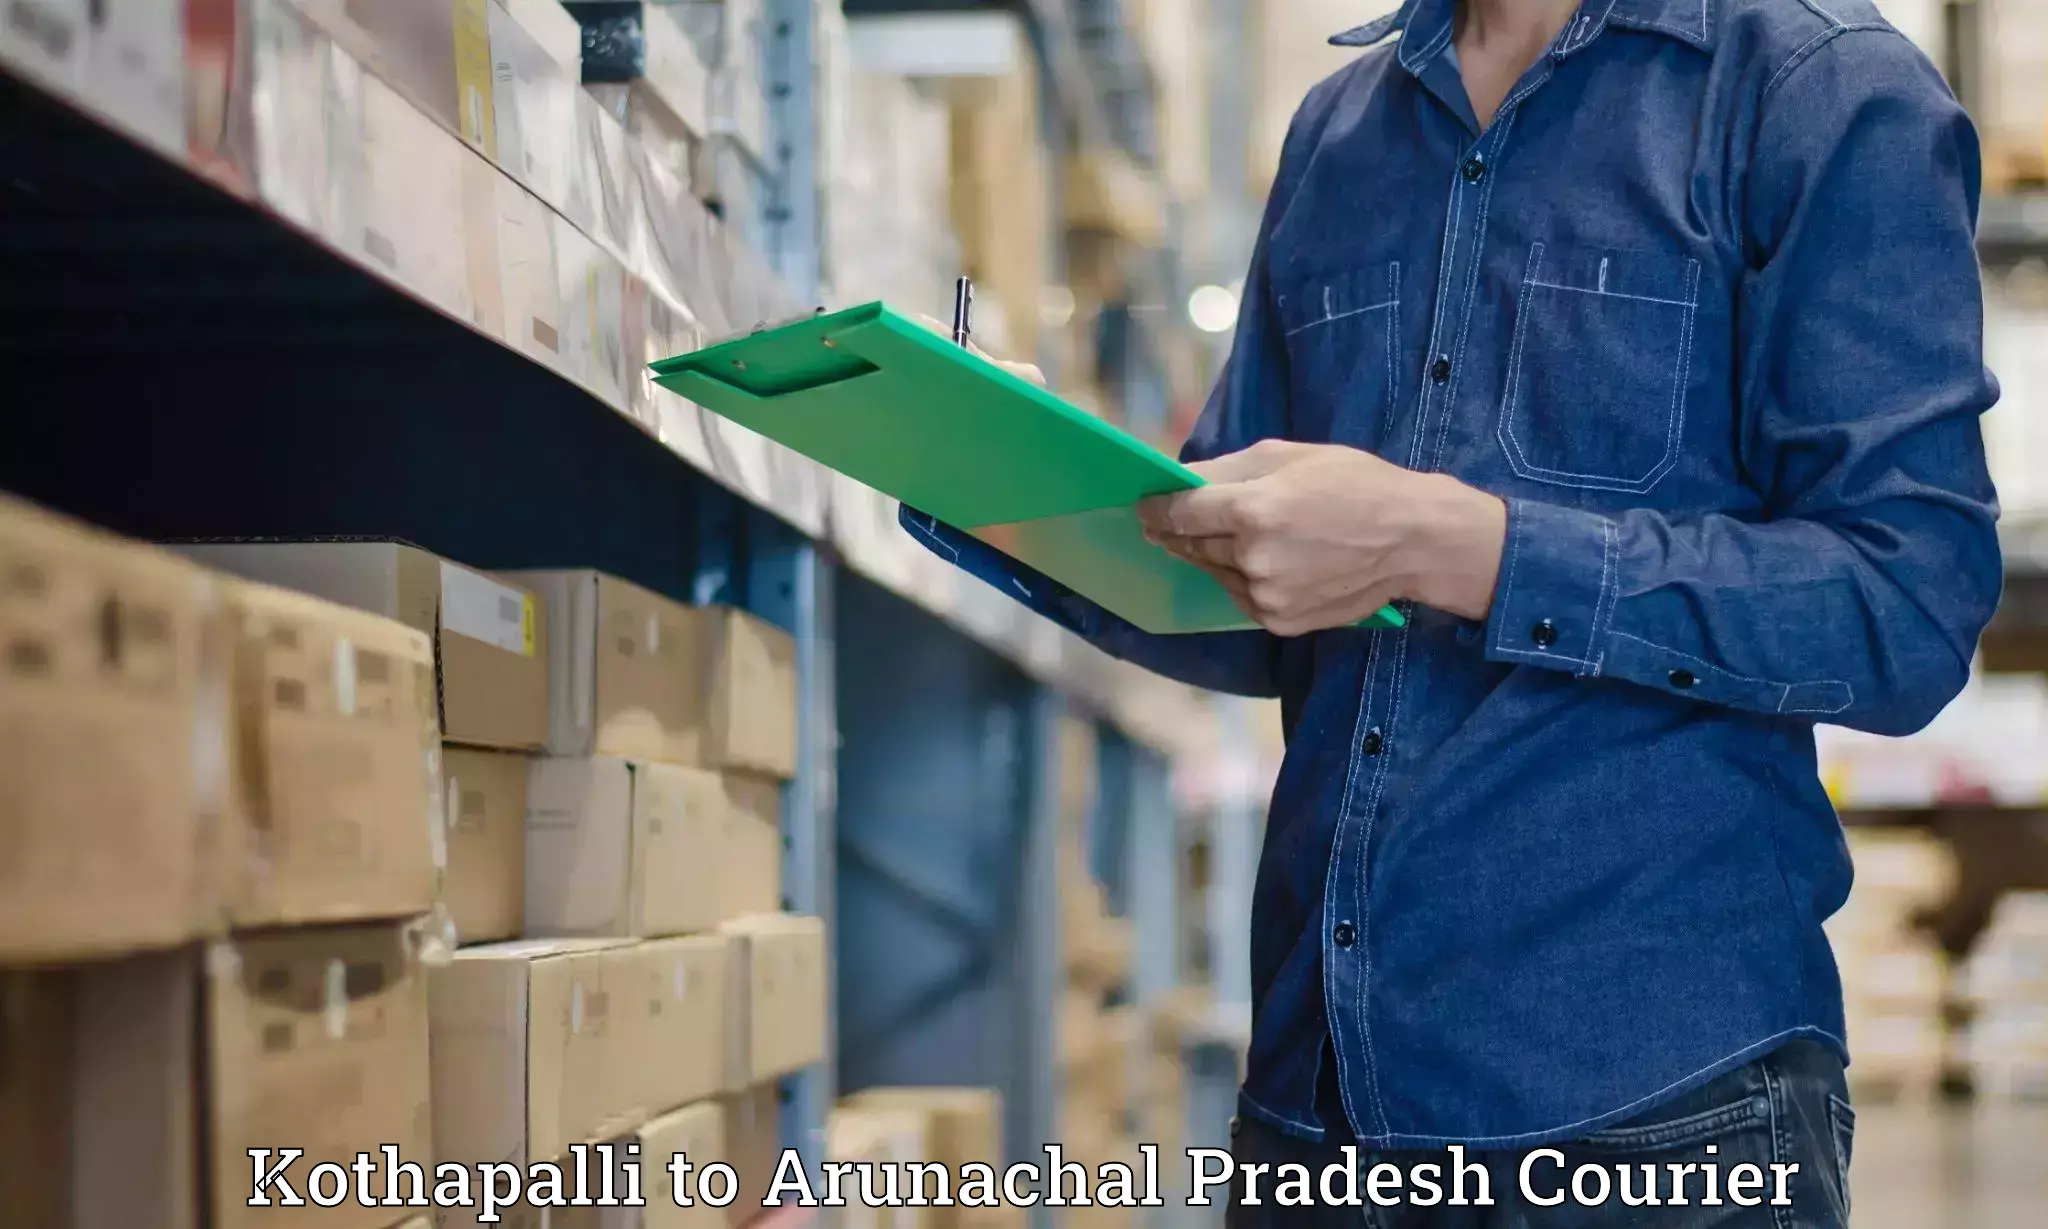 Efficient order fulfillment Kothapalli to Tirap